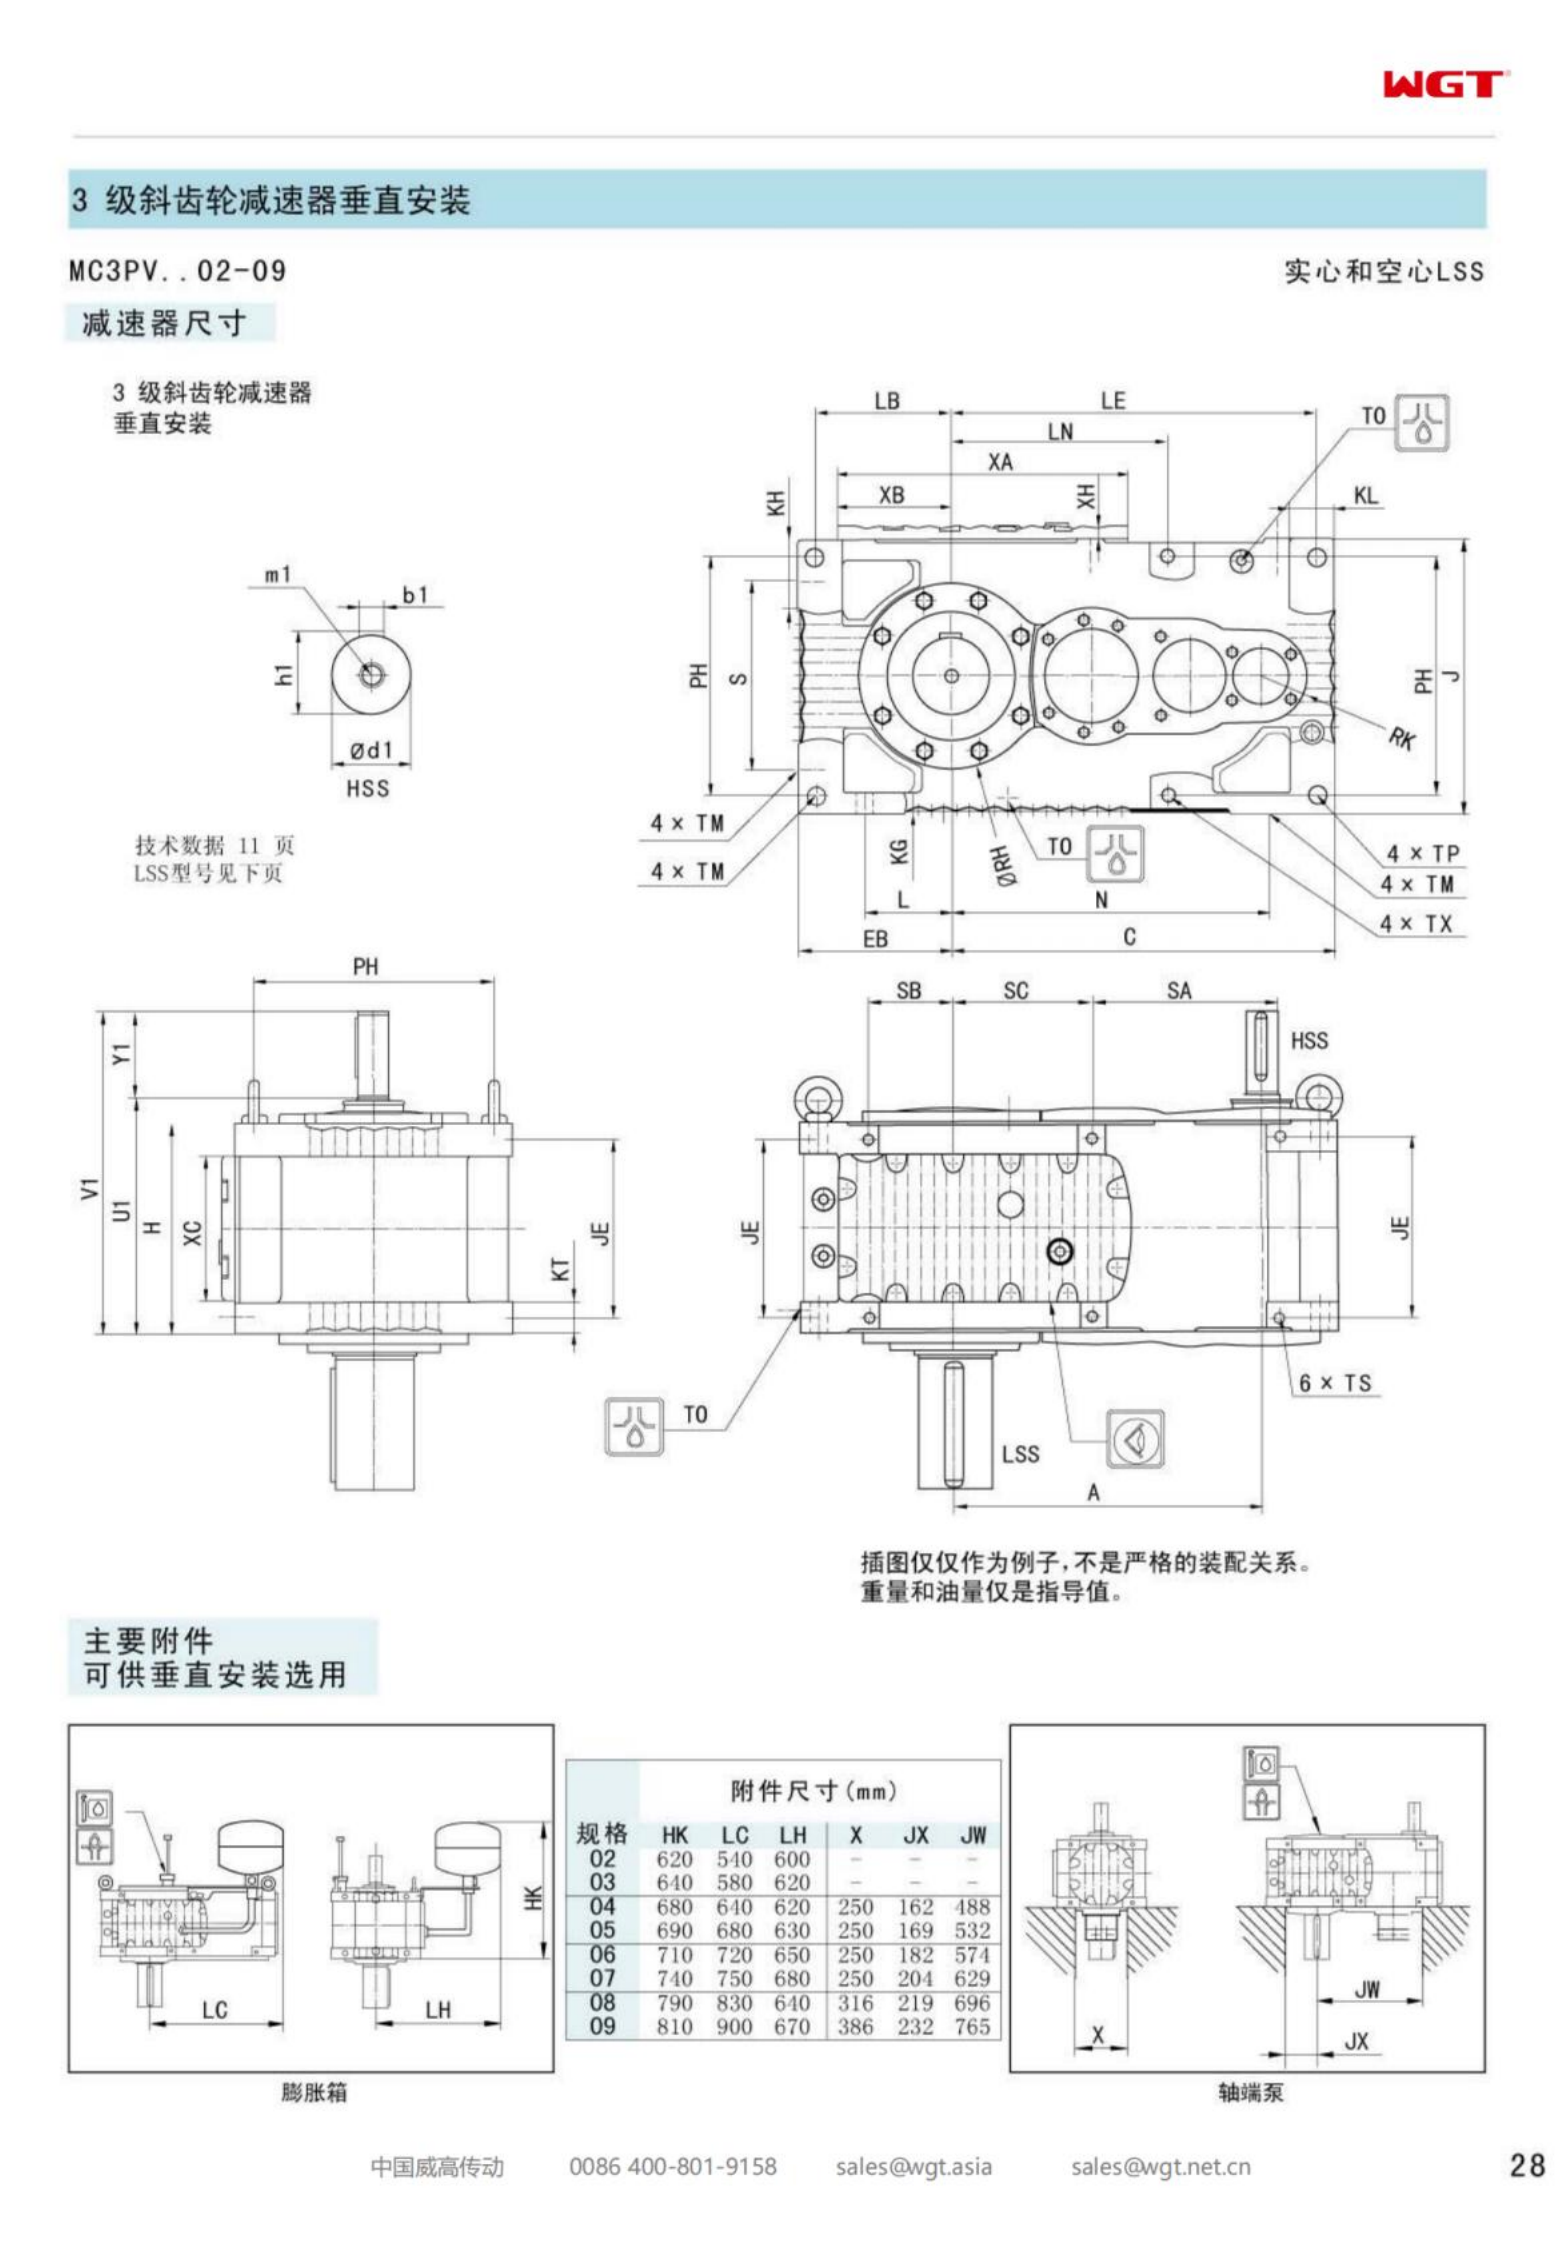 MC3PVHF06 replaces _SEW_MC_Series gearbox (patent)